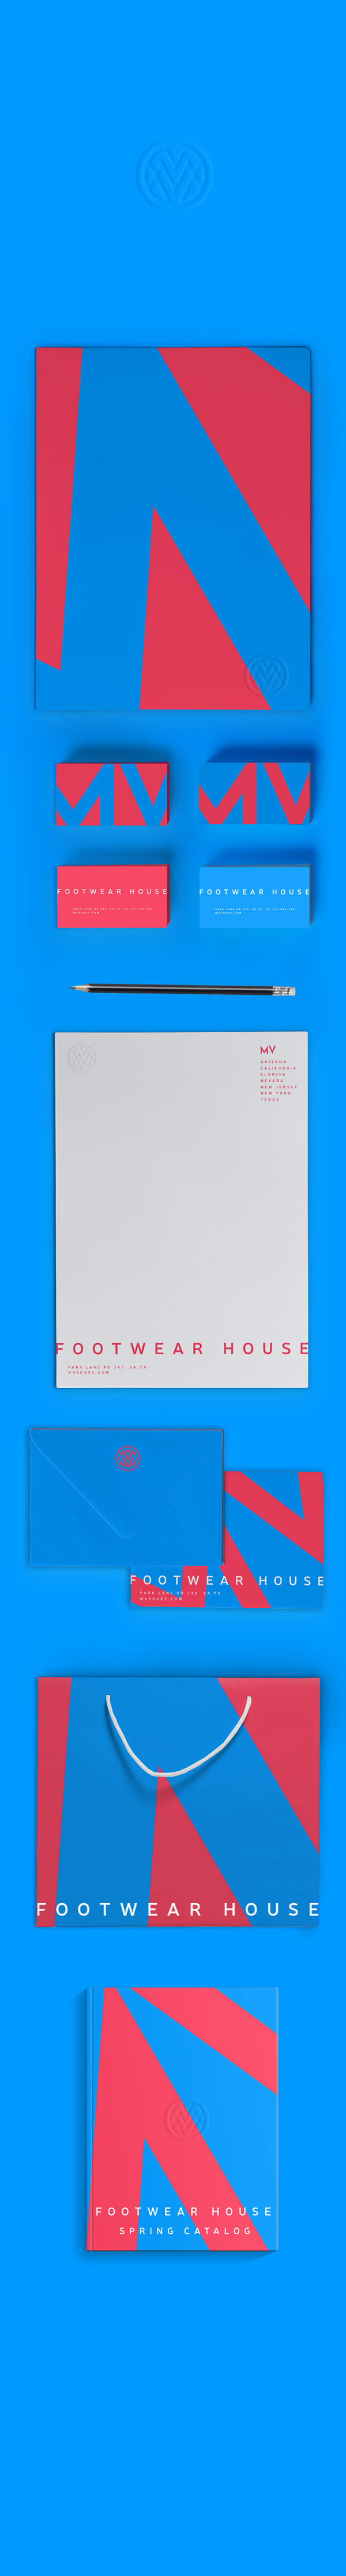 MV Footwarehouse 0